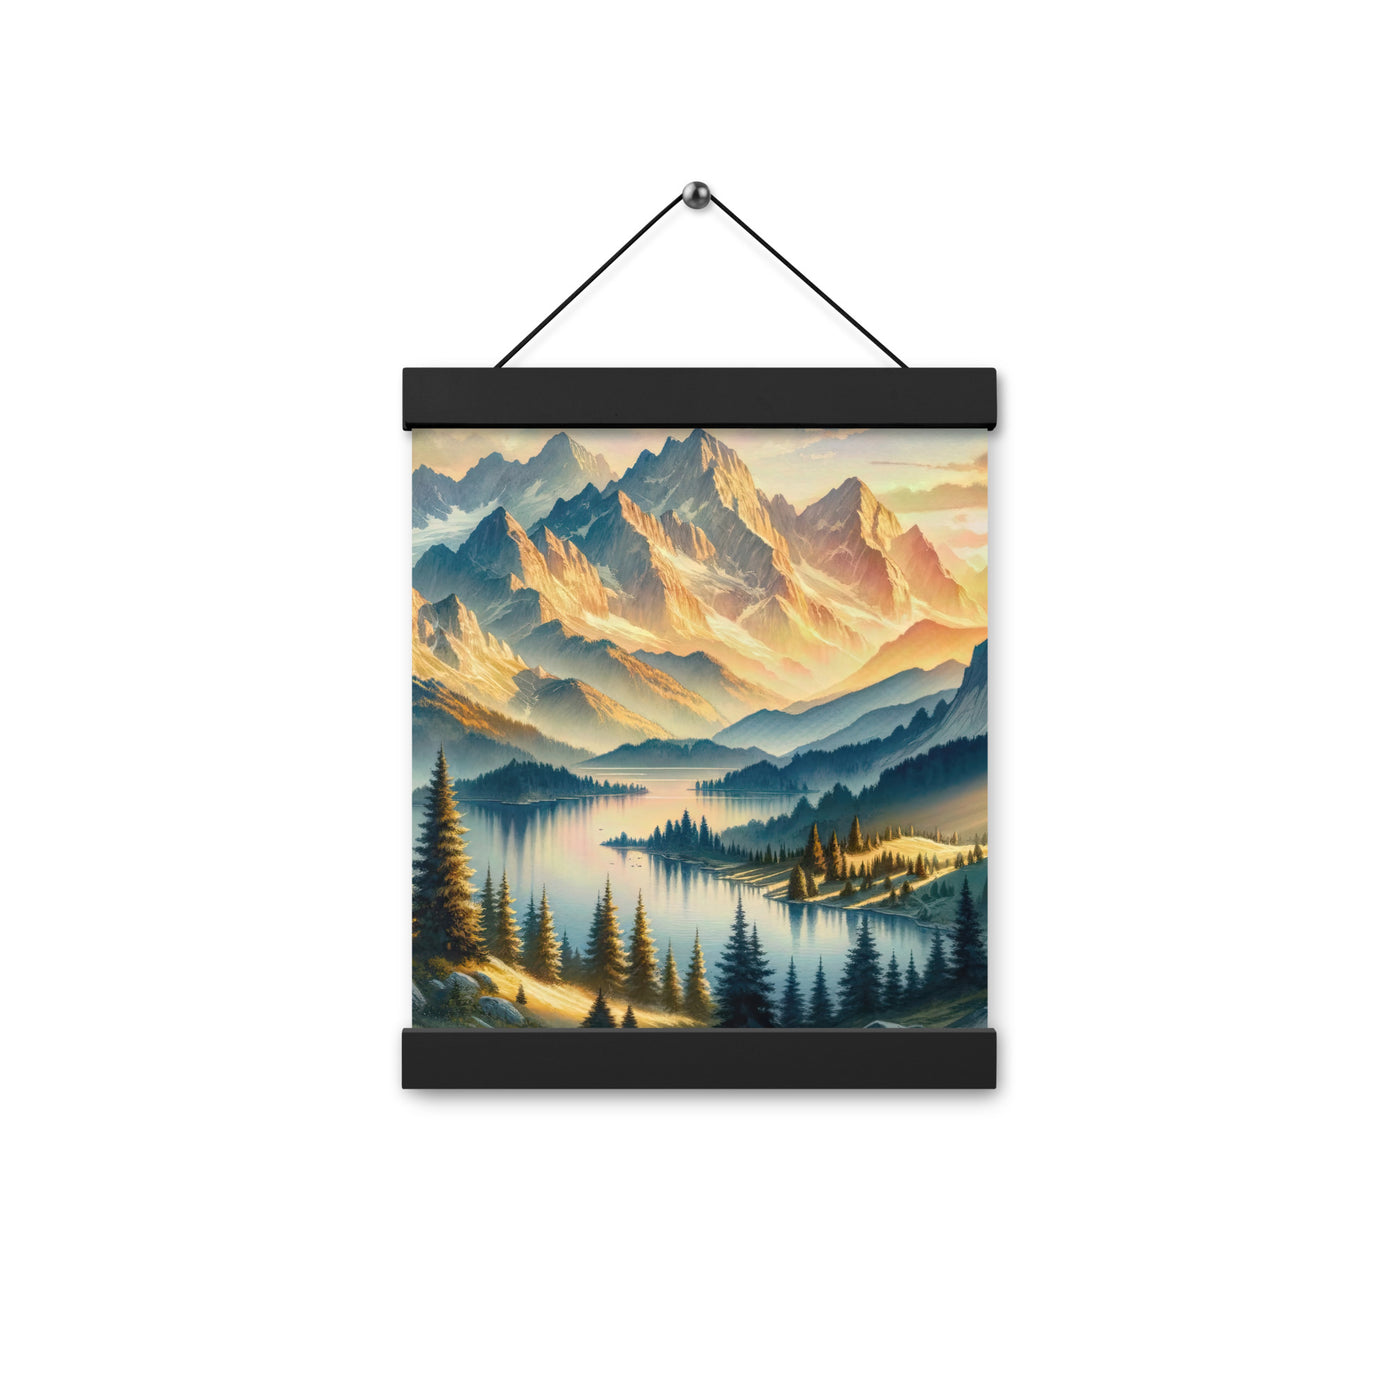 Aquarell der Alpenpracht bei Sonnenuntergang, Berge im goldenen Licht - Premium Poster mit Aufhängung berge xxx yyy zzz 20.3 x 25.4 cm